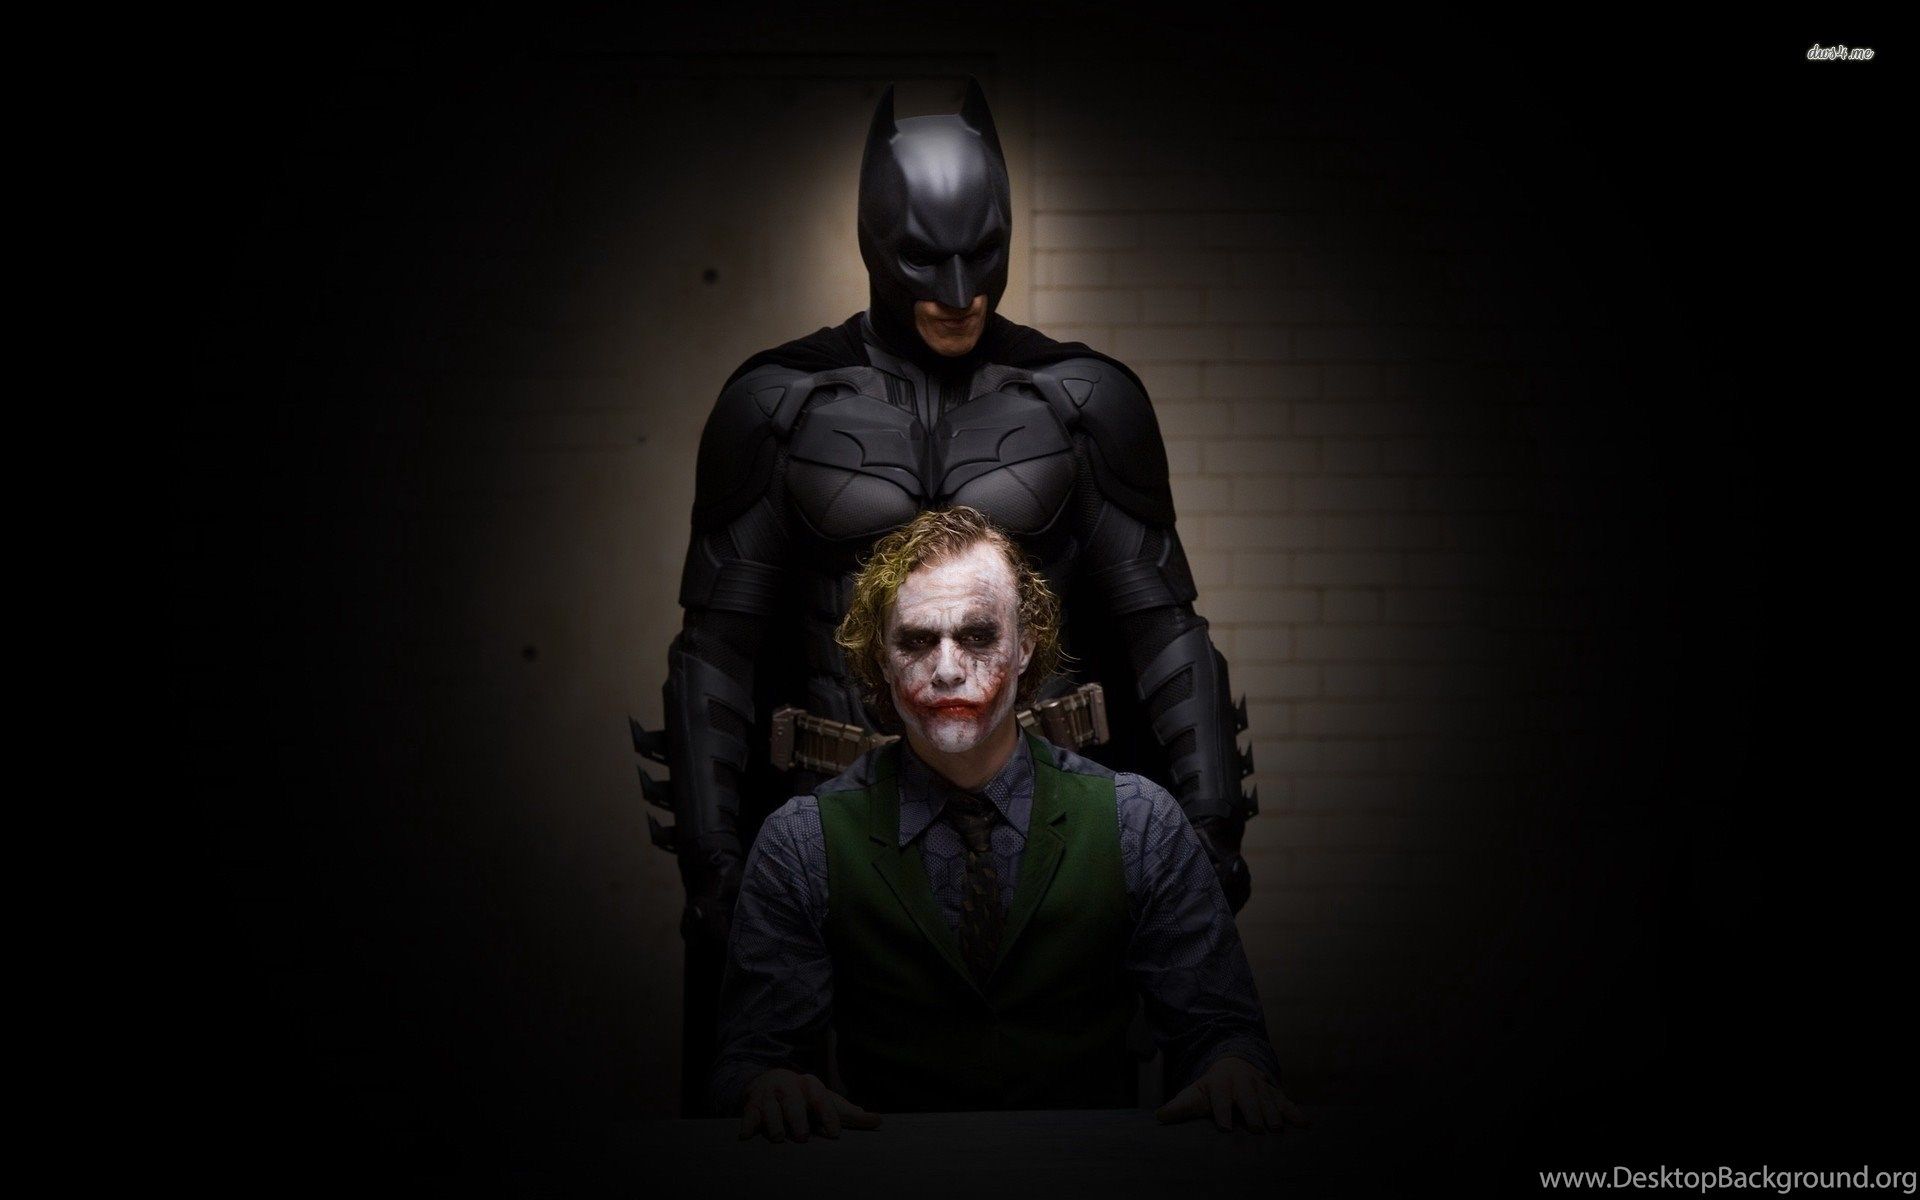 Batman And The Joker, Christian Bale, Heath Ledger, The Dark